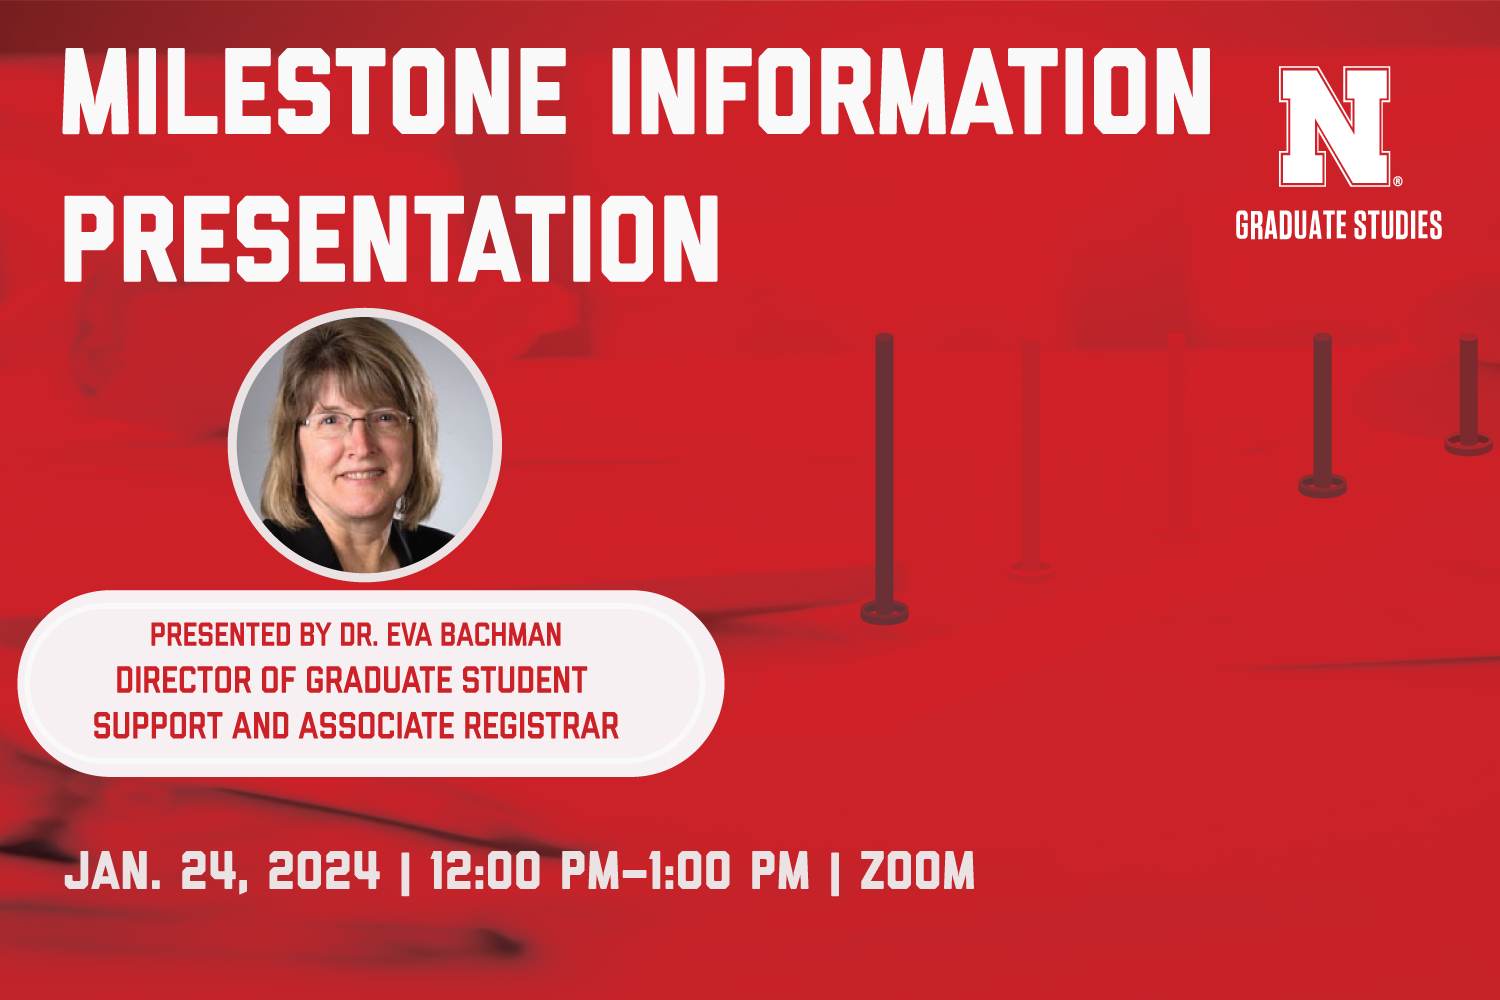 Milestone Information Presentation on January 24, 2024 by Dr. Eva Bachman.